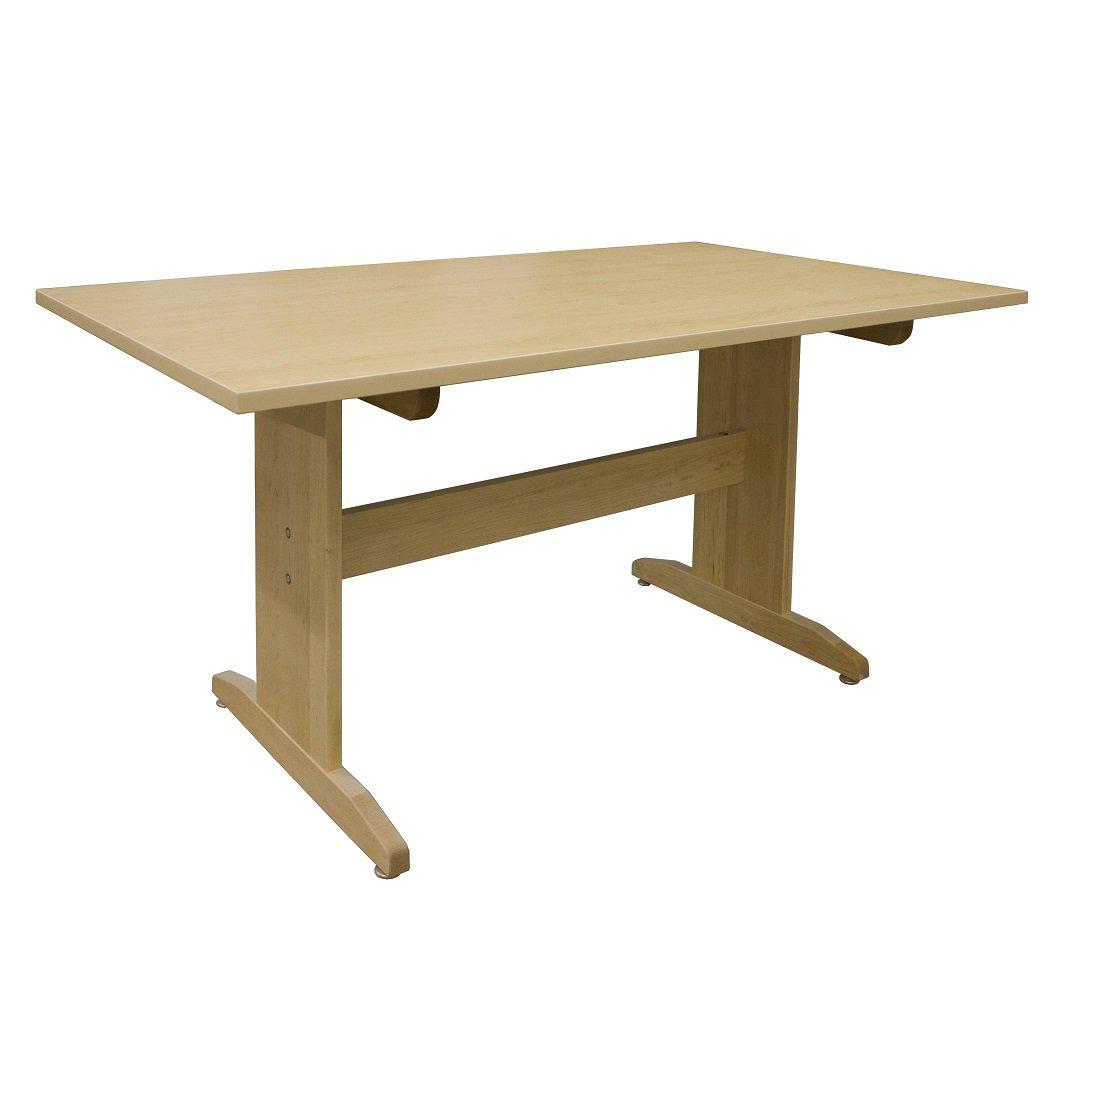 Art Table, 42" x 72" Maple Grain Patterned HPL Top, 36" High